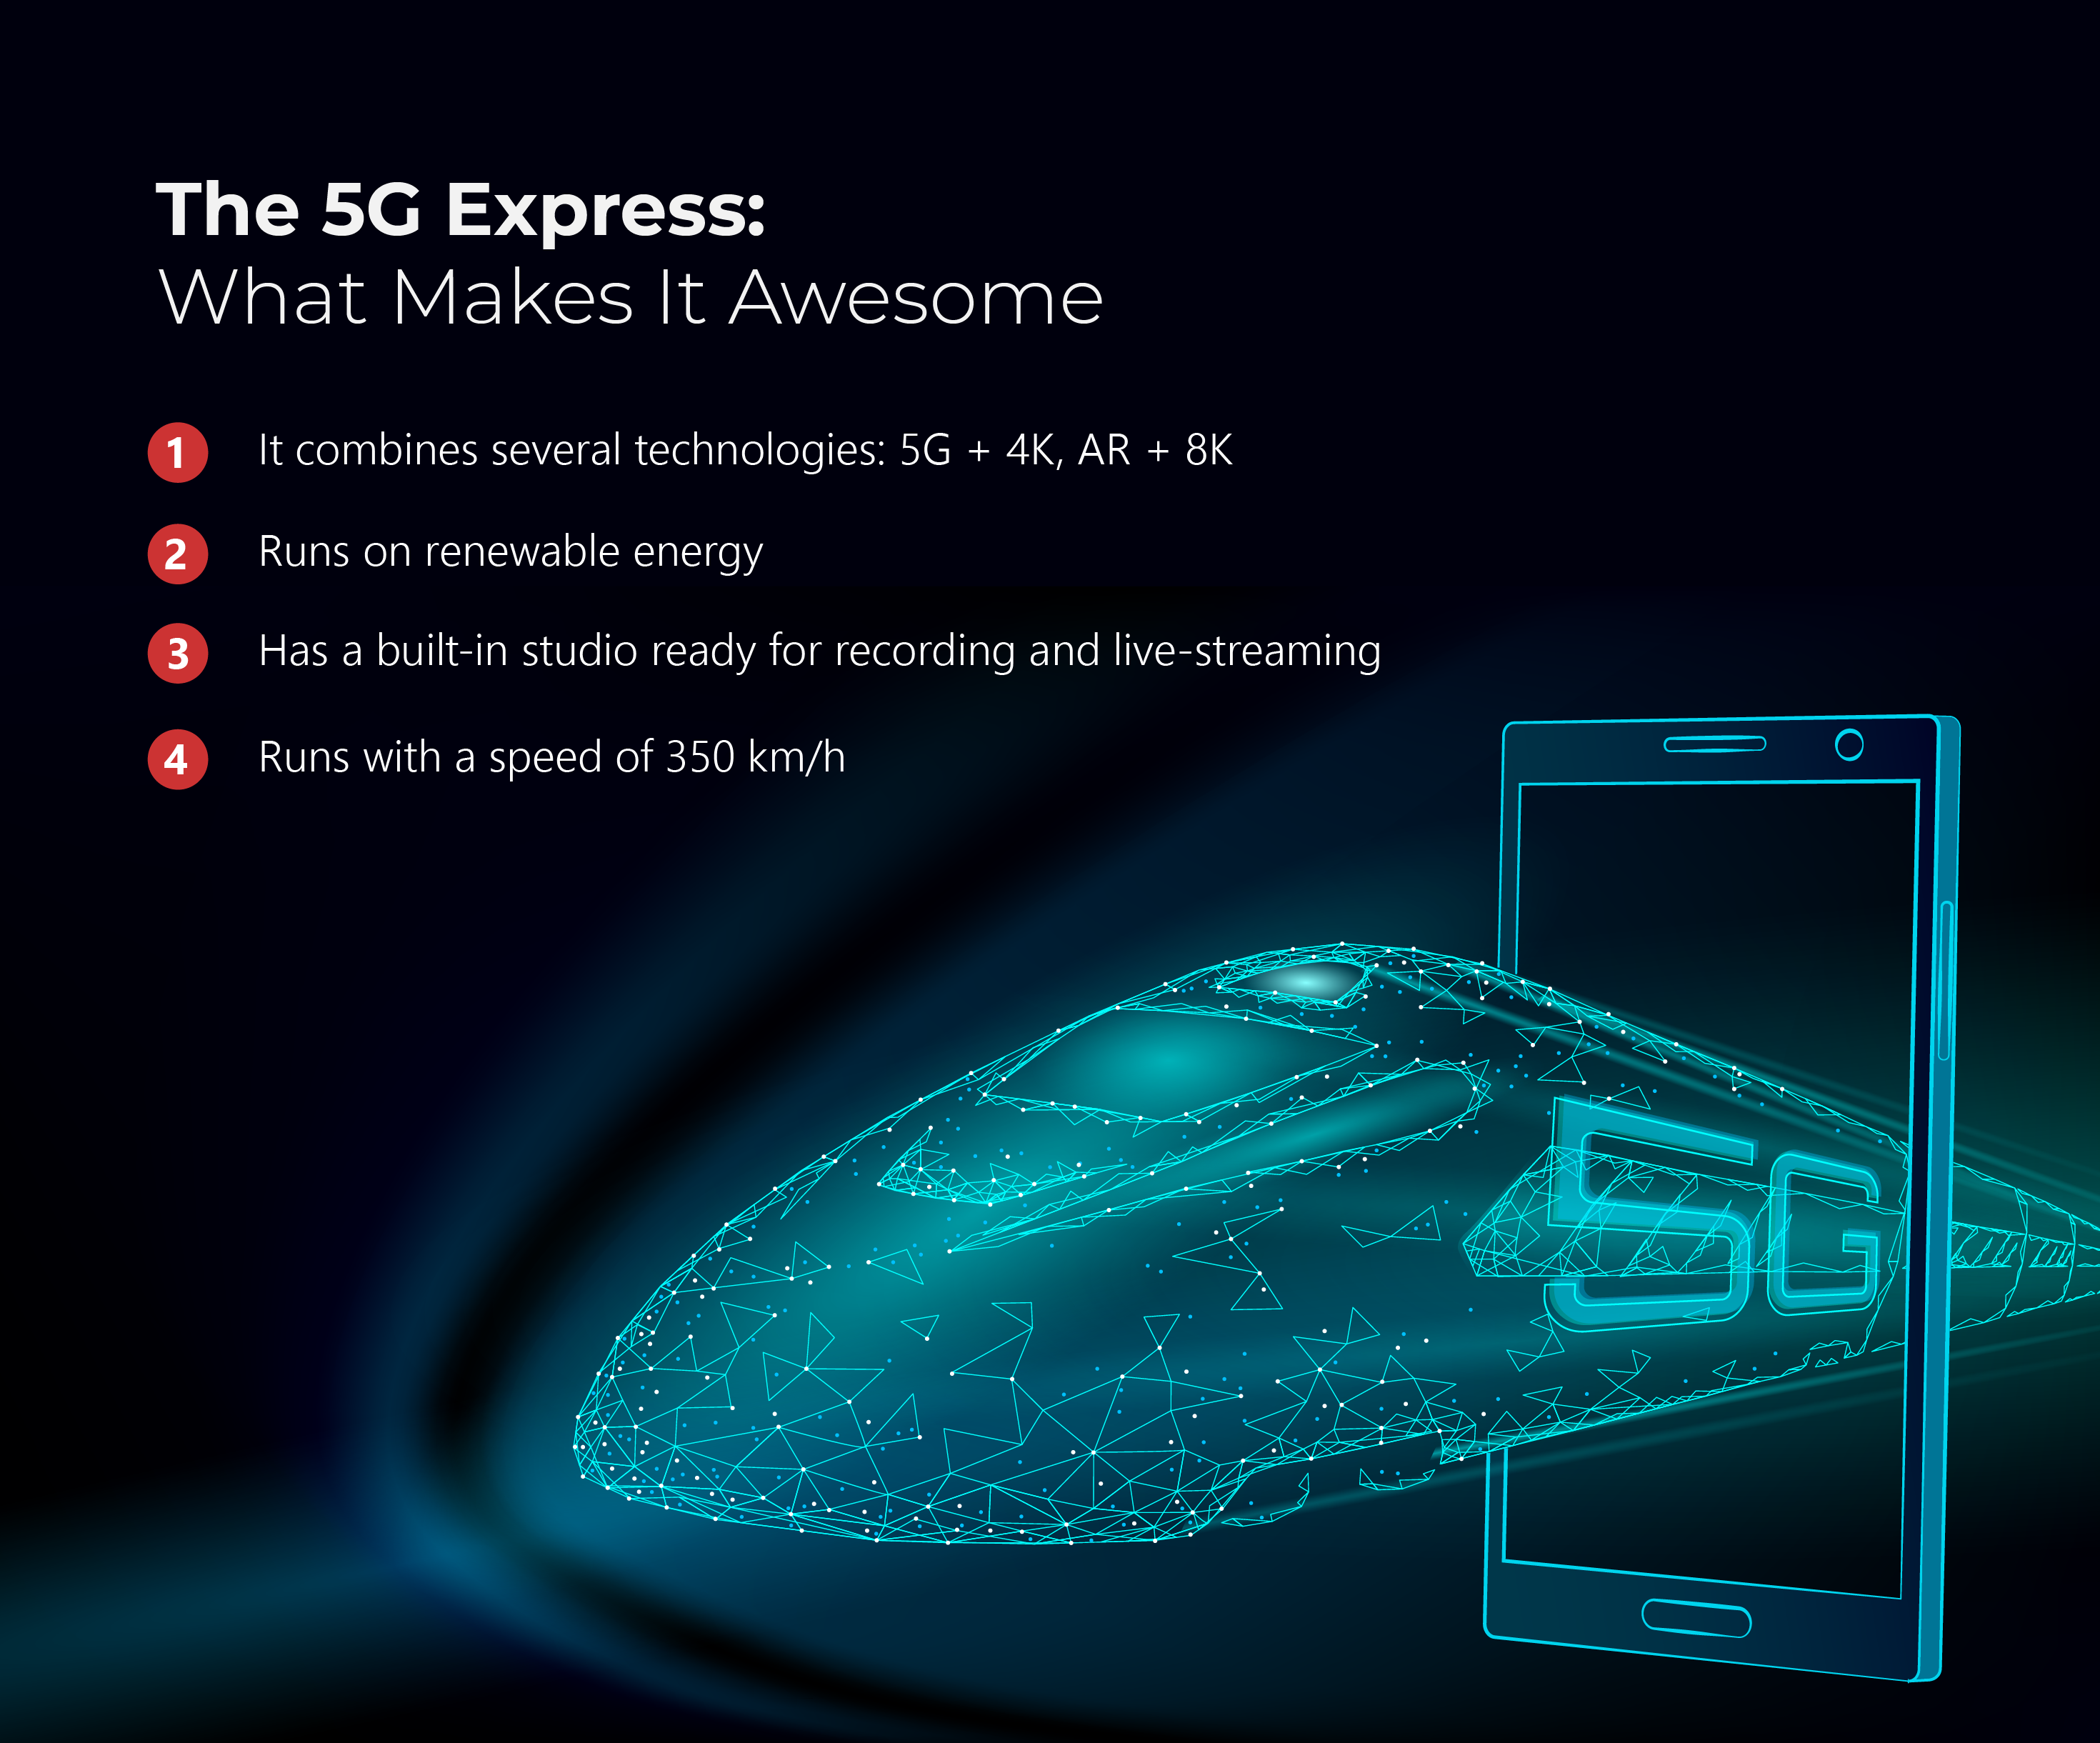 The 5G Express